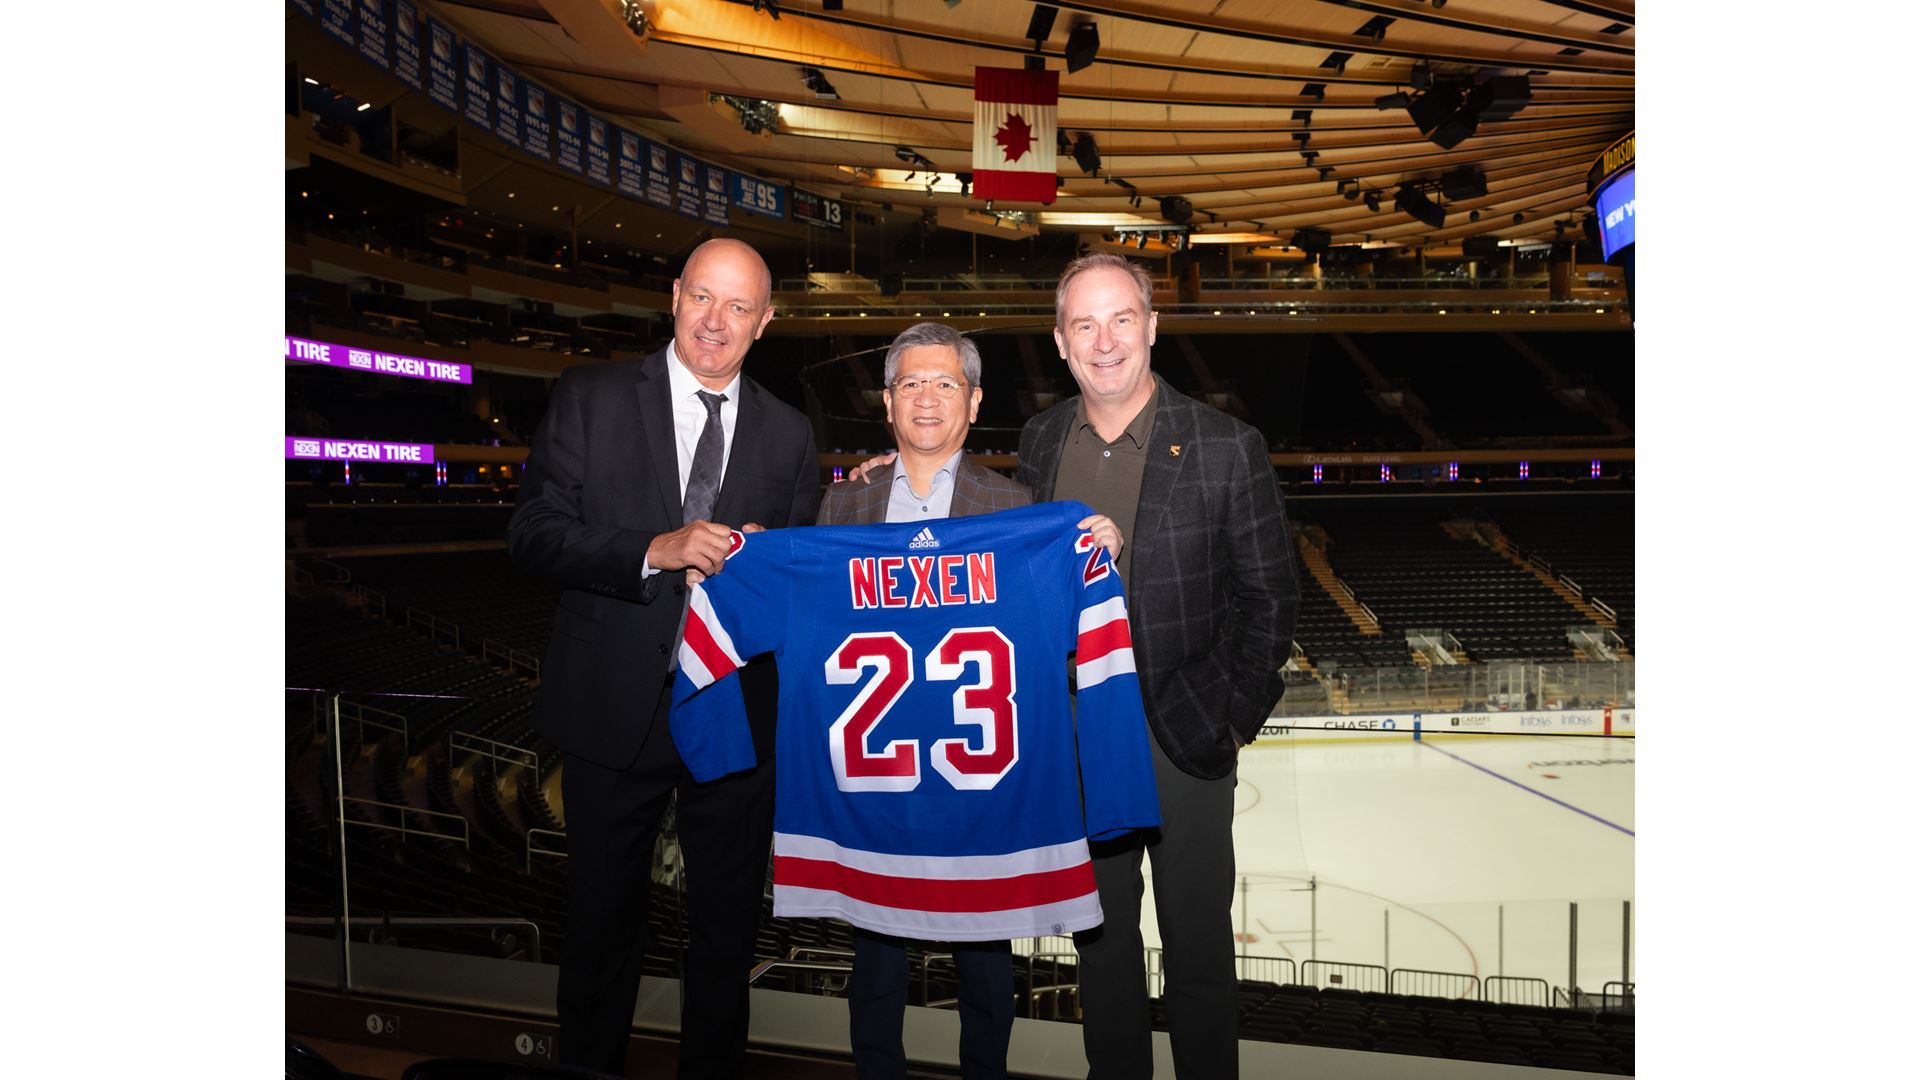 NEXEN TIRE becomes official tire partner of the New York Rangers